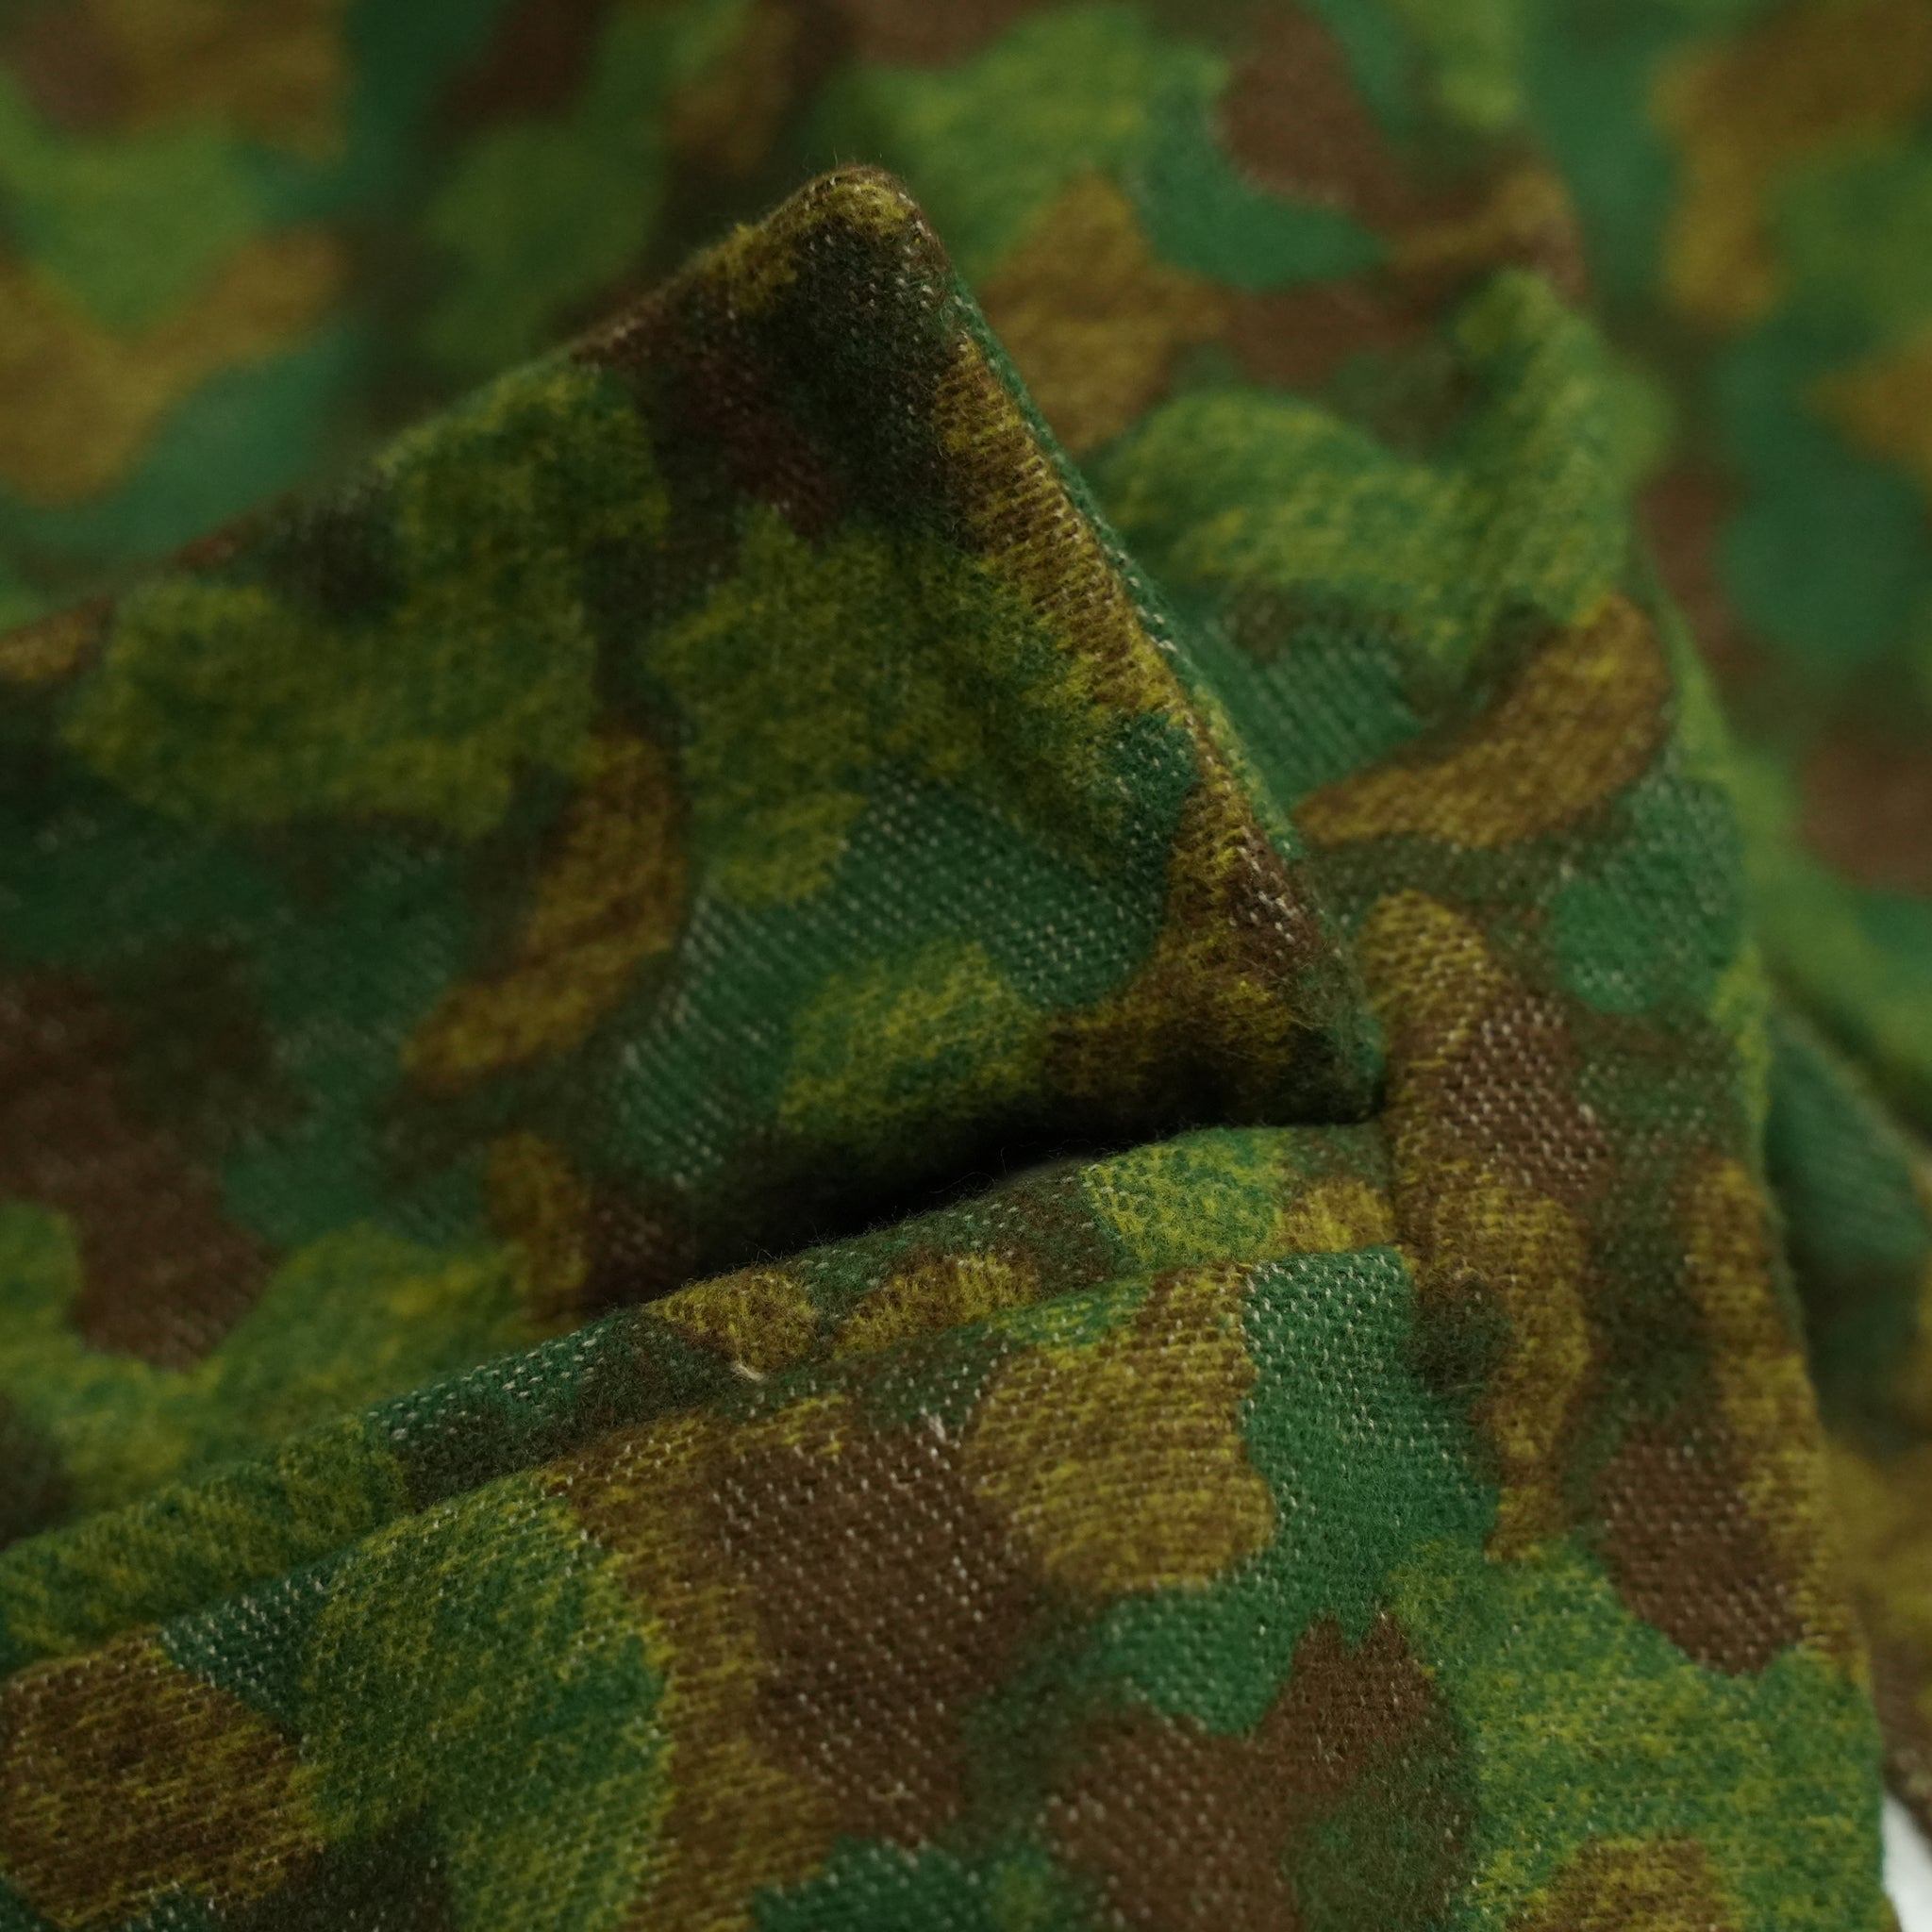 No:M32012 | Name:Jute Coat | Color:Jacquard Cotton Green Camo【MONITALY_モニタリー】